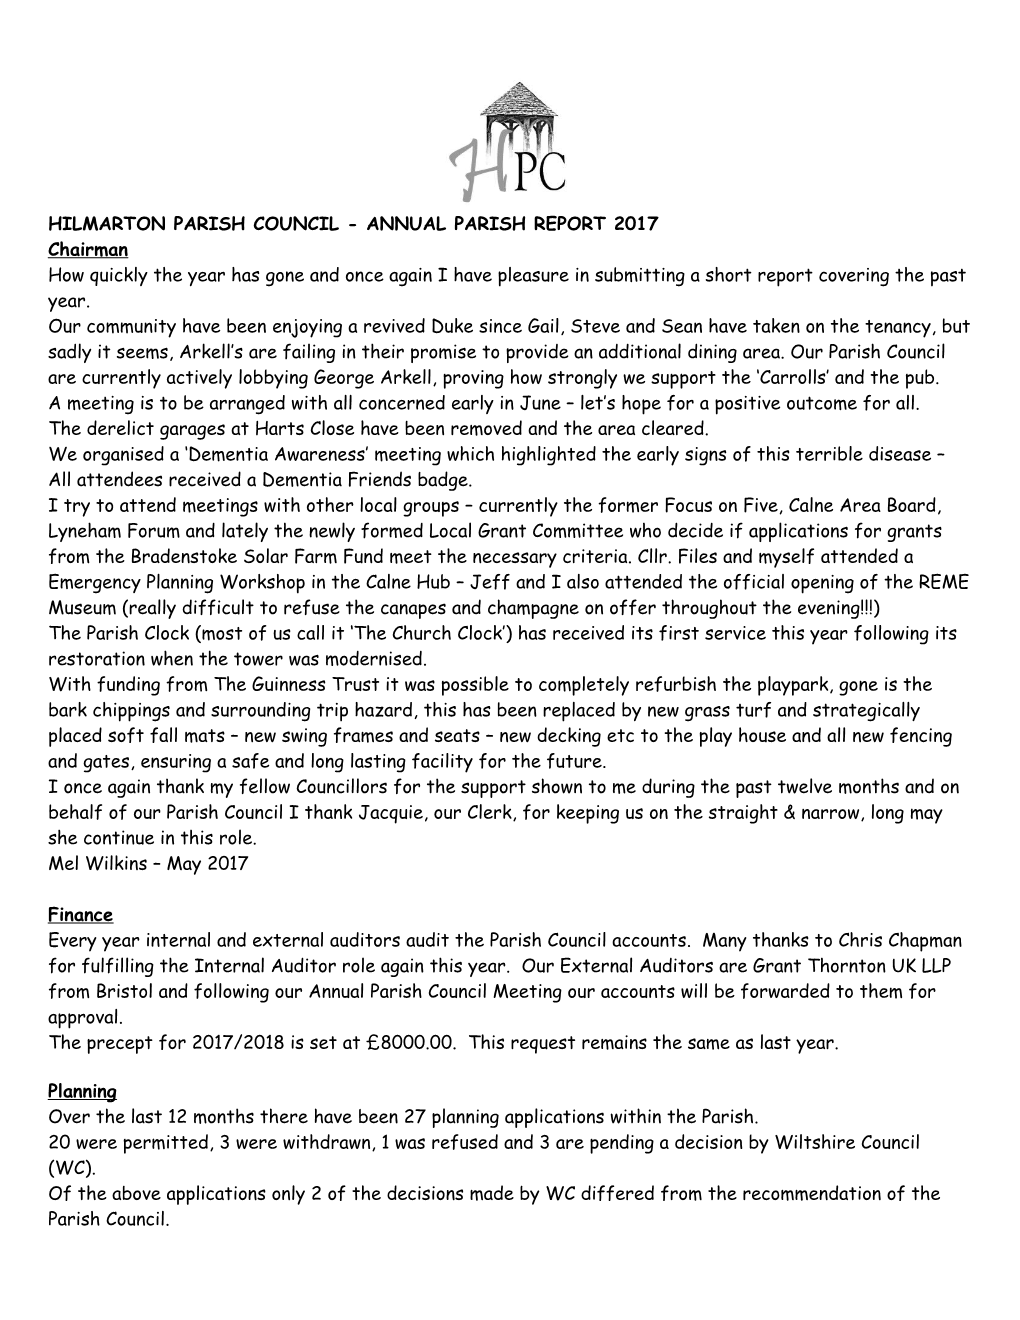 Hilmarton Parish Council - Annual Parish Report 2017